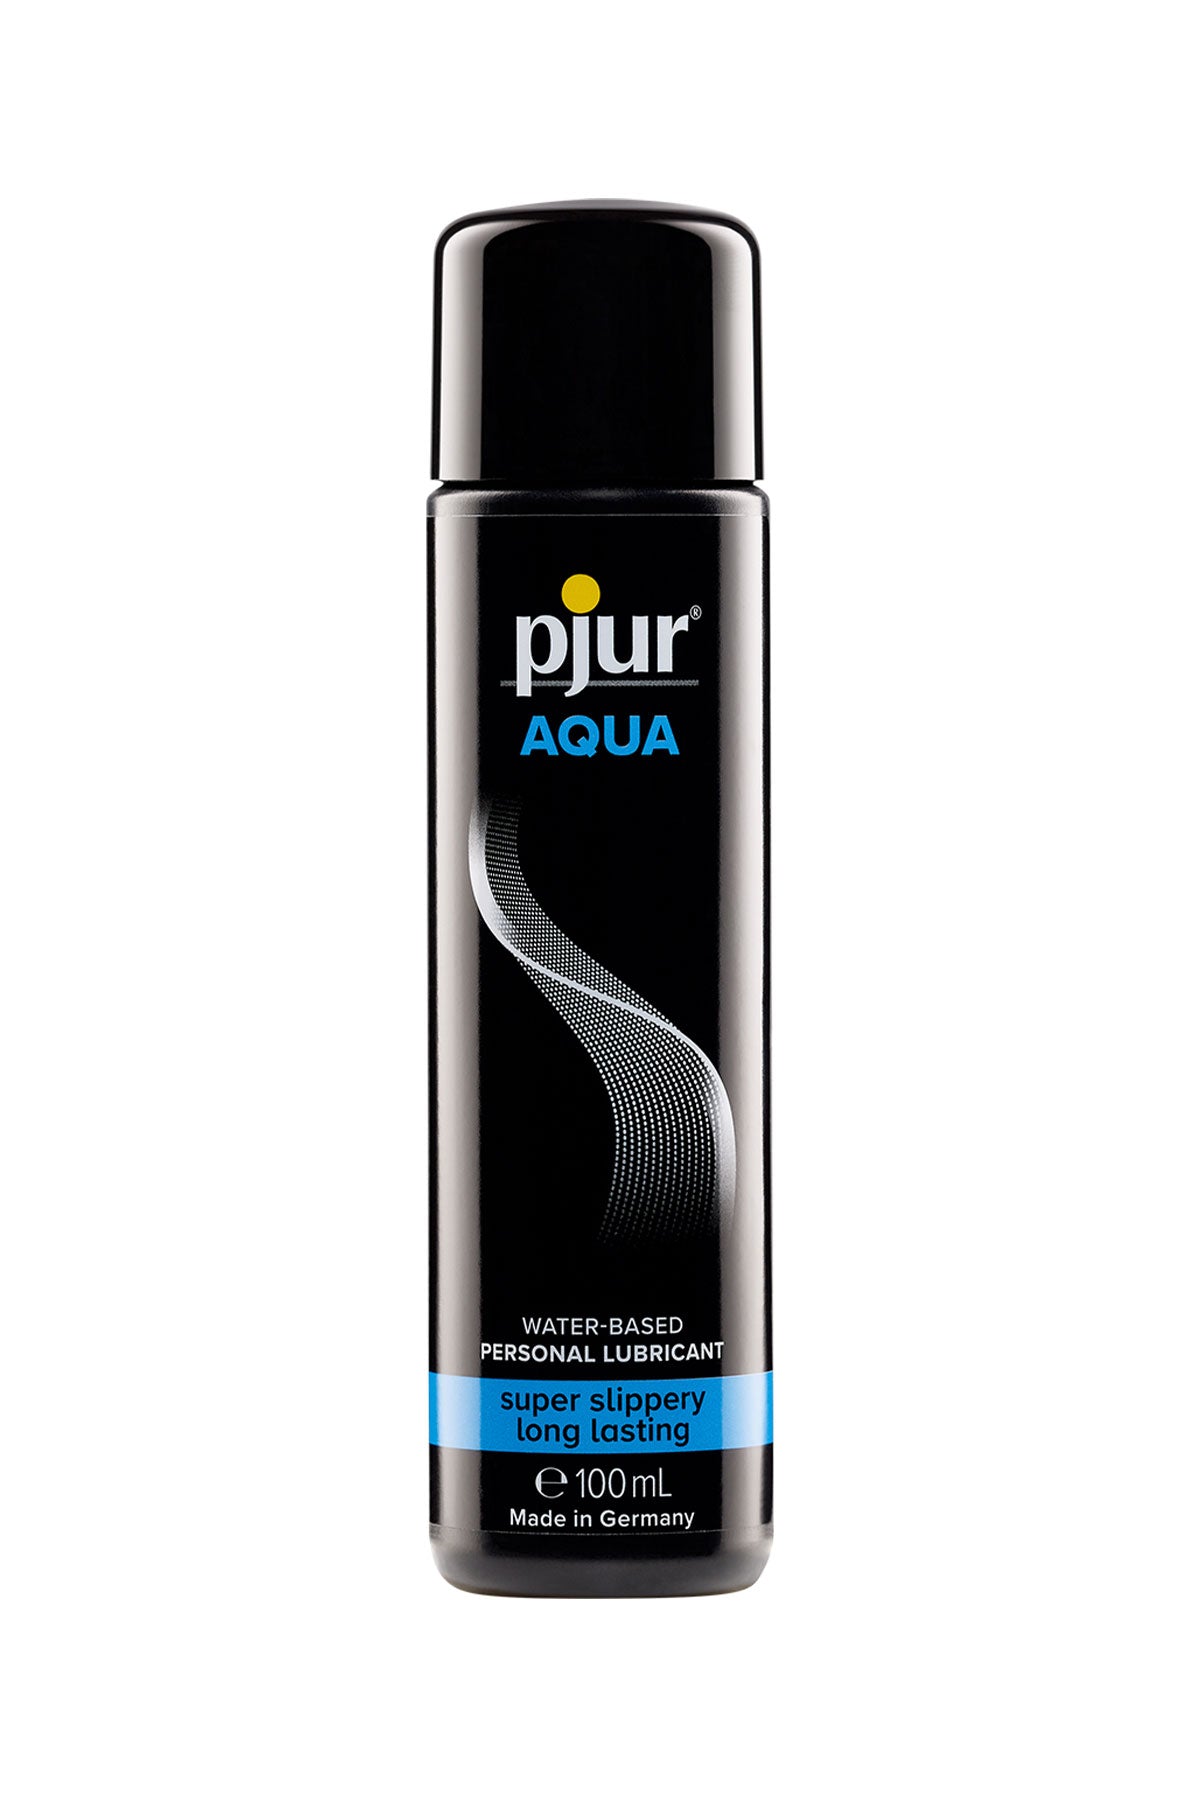 pjur Aqua Water-based Lubricant 100ml | Matilda's